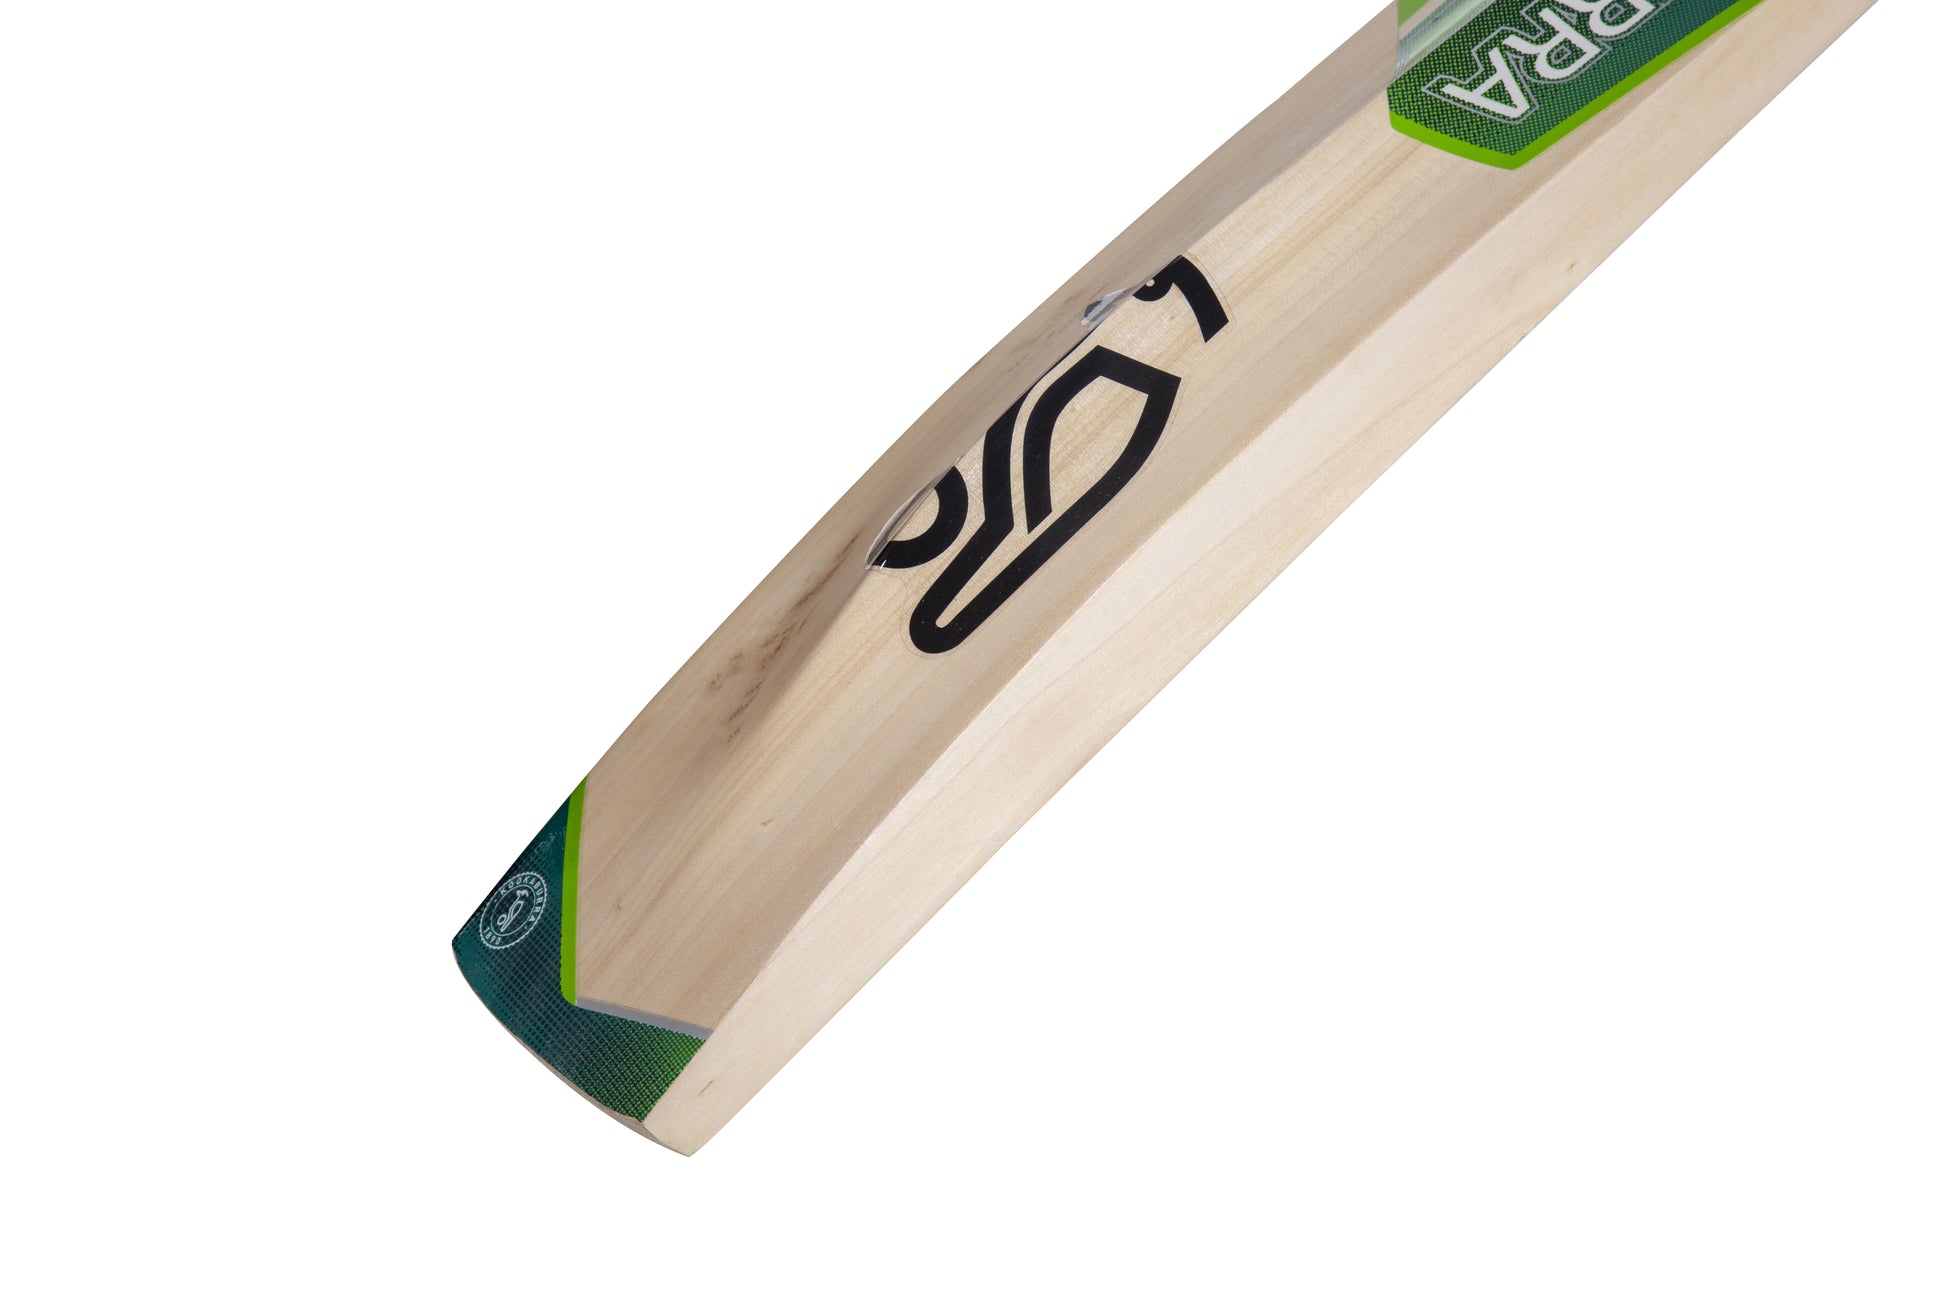 KOOKABURRA Cricket Bat Kashmir Willow KAHUNA PRO 100